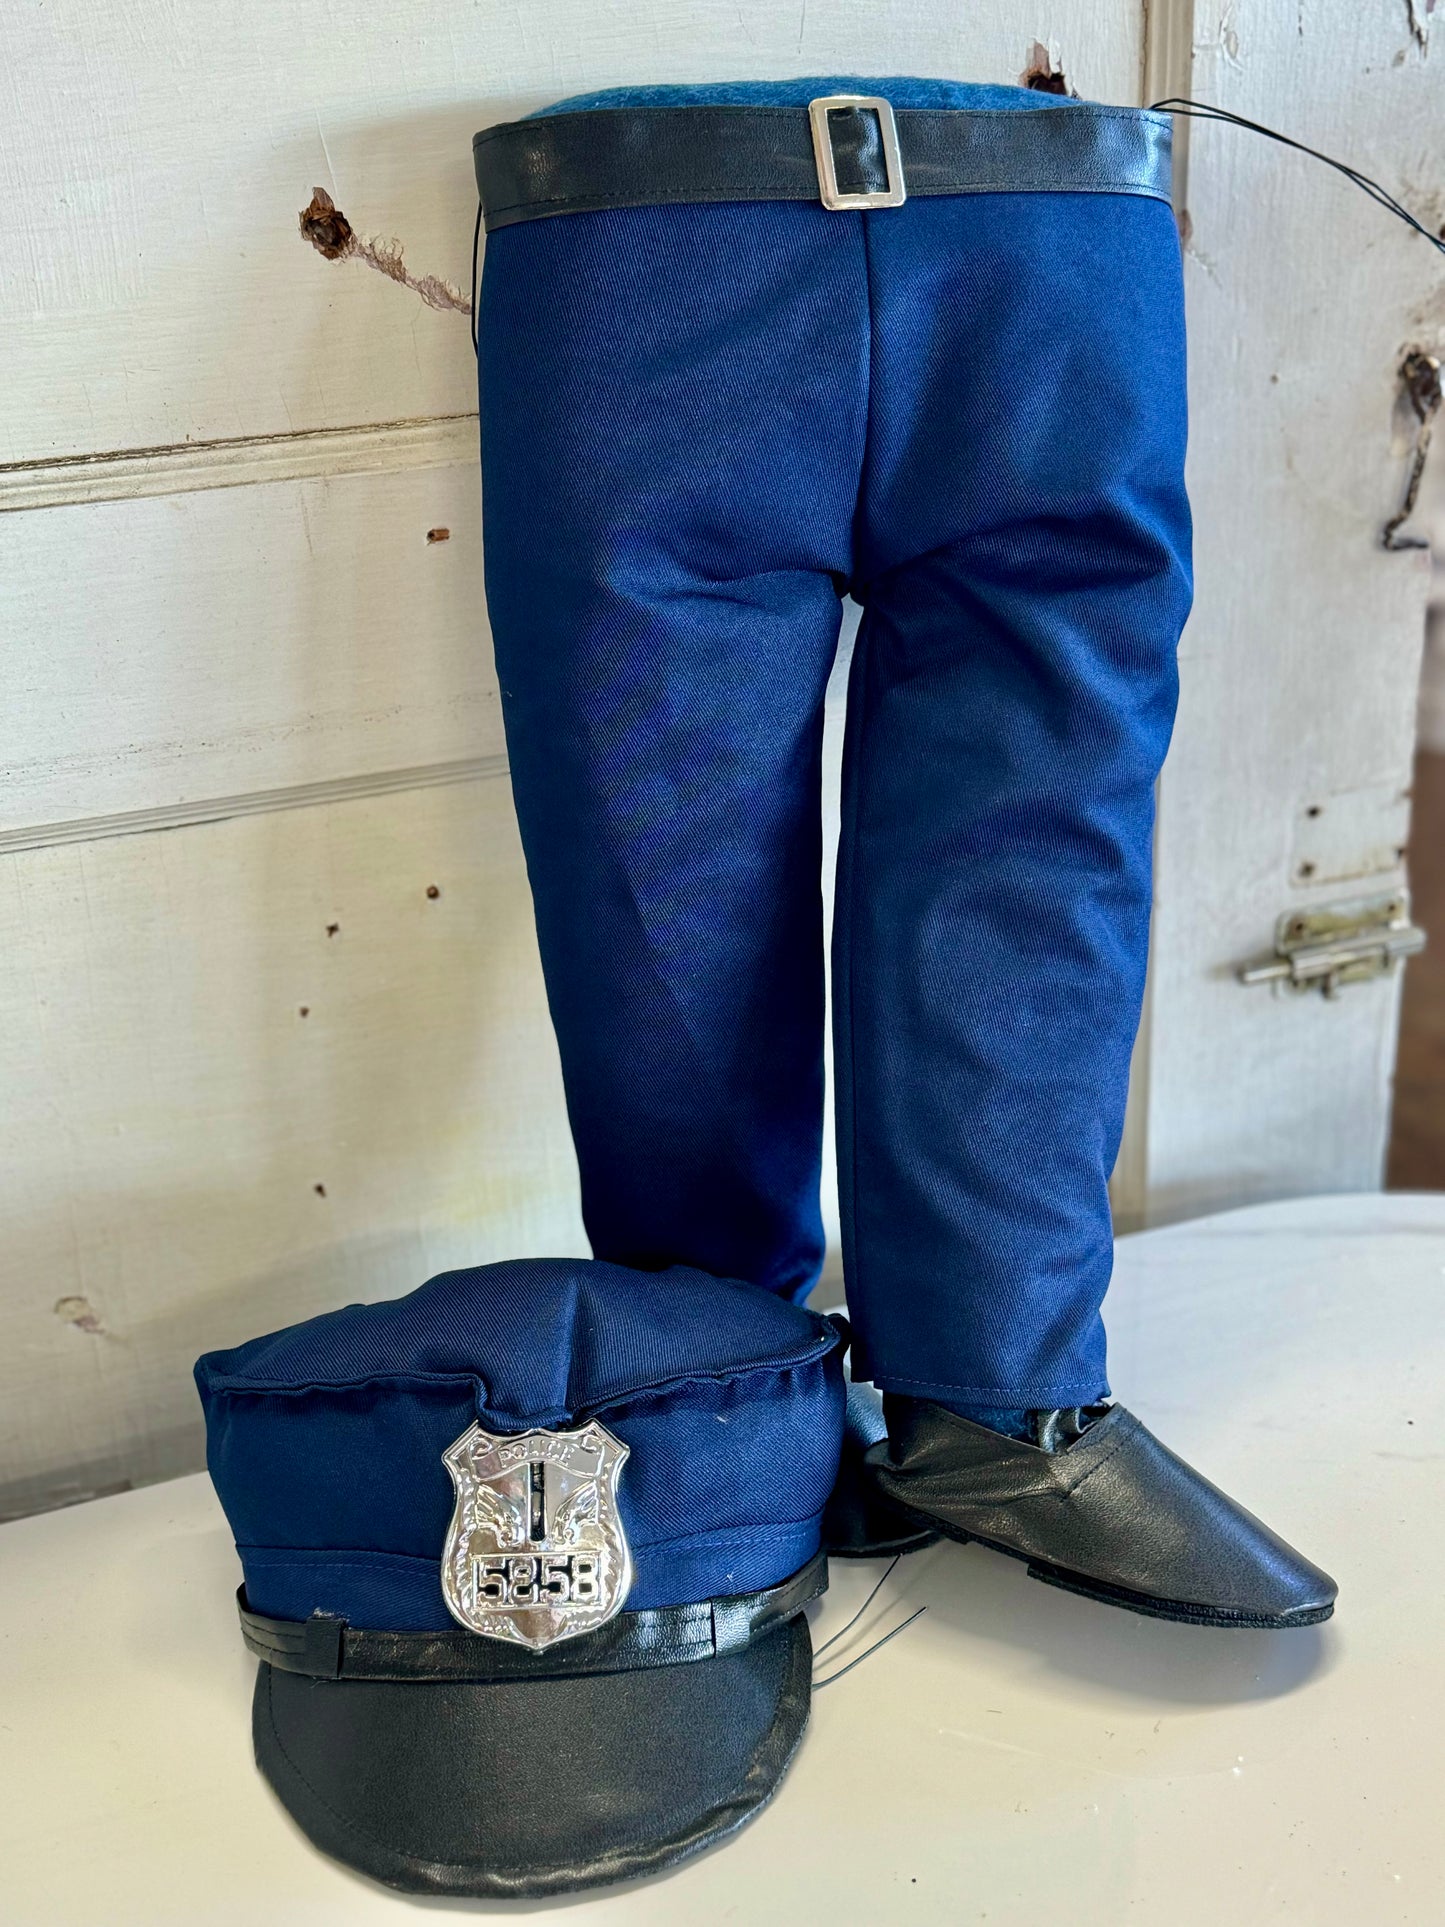 Police Officer Wreath Kit